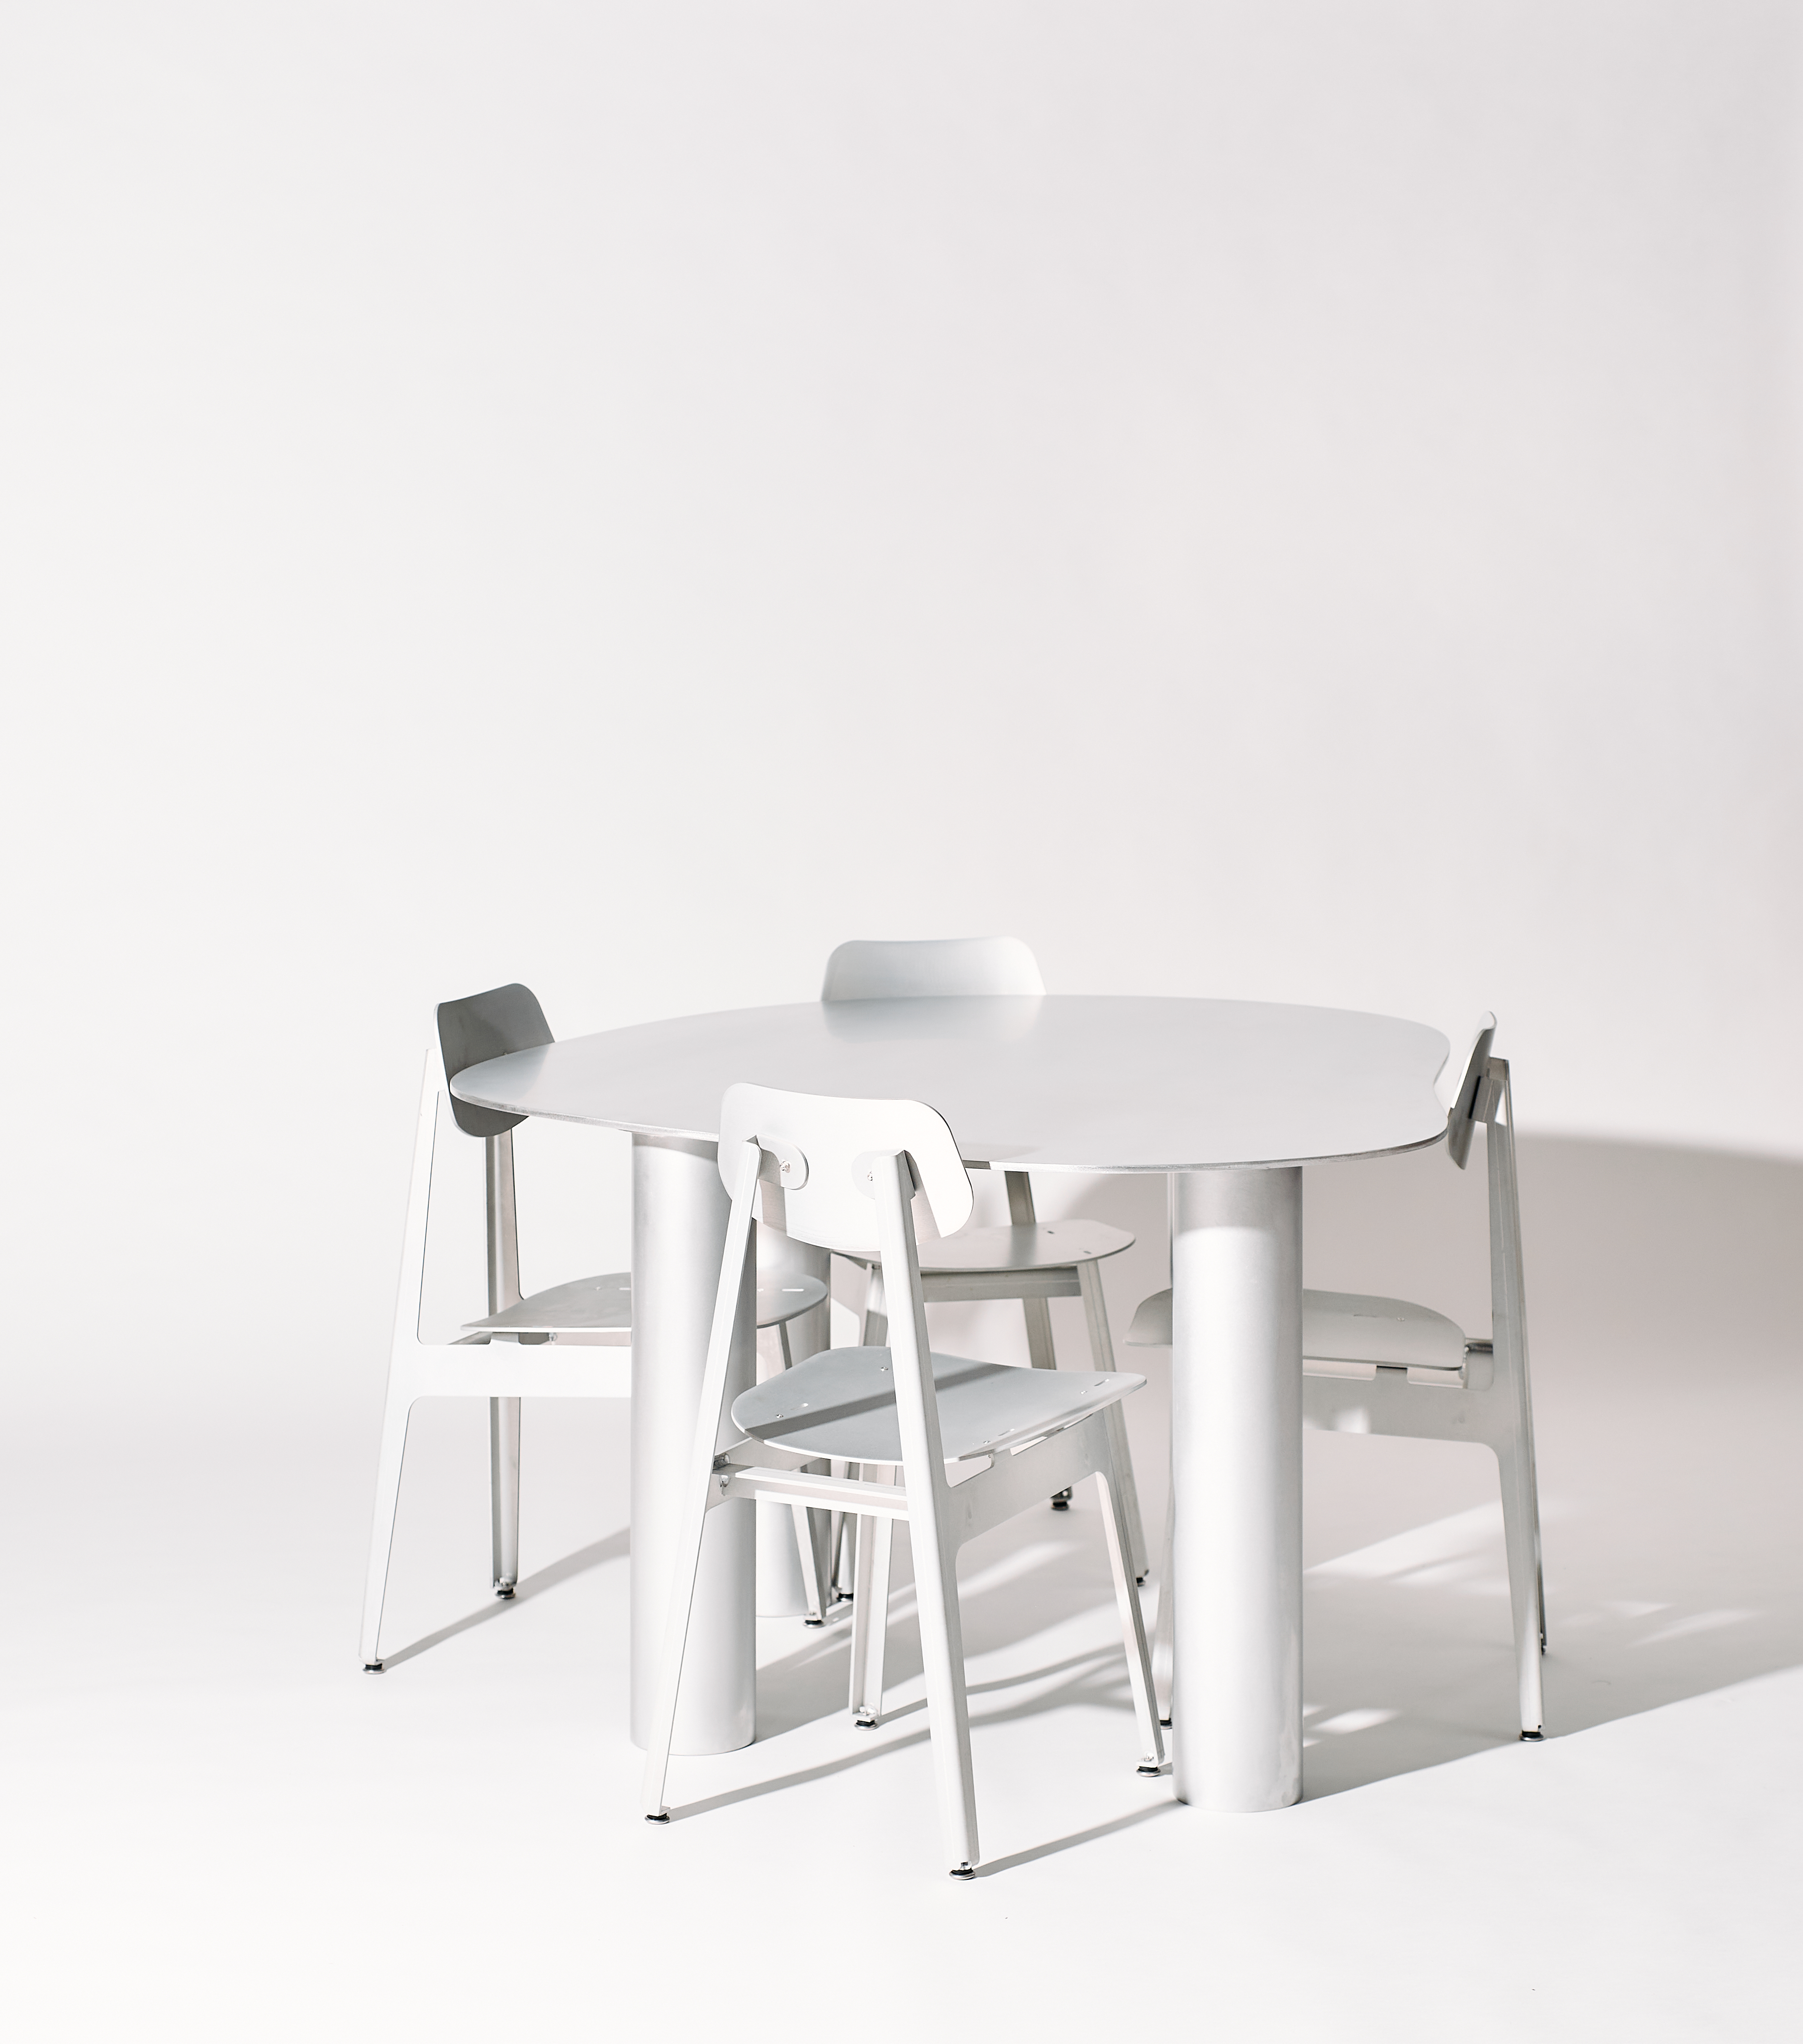 Studio Klein furniture